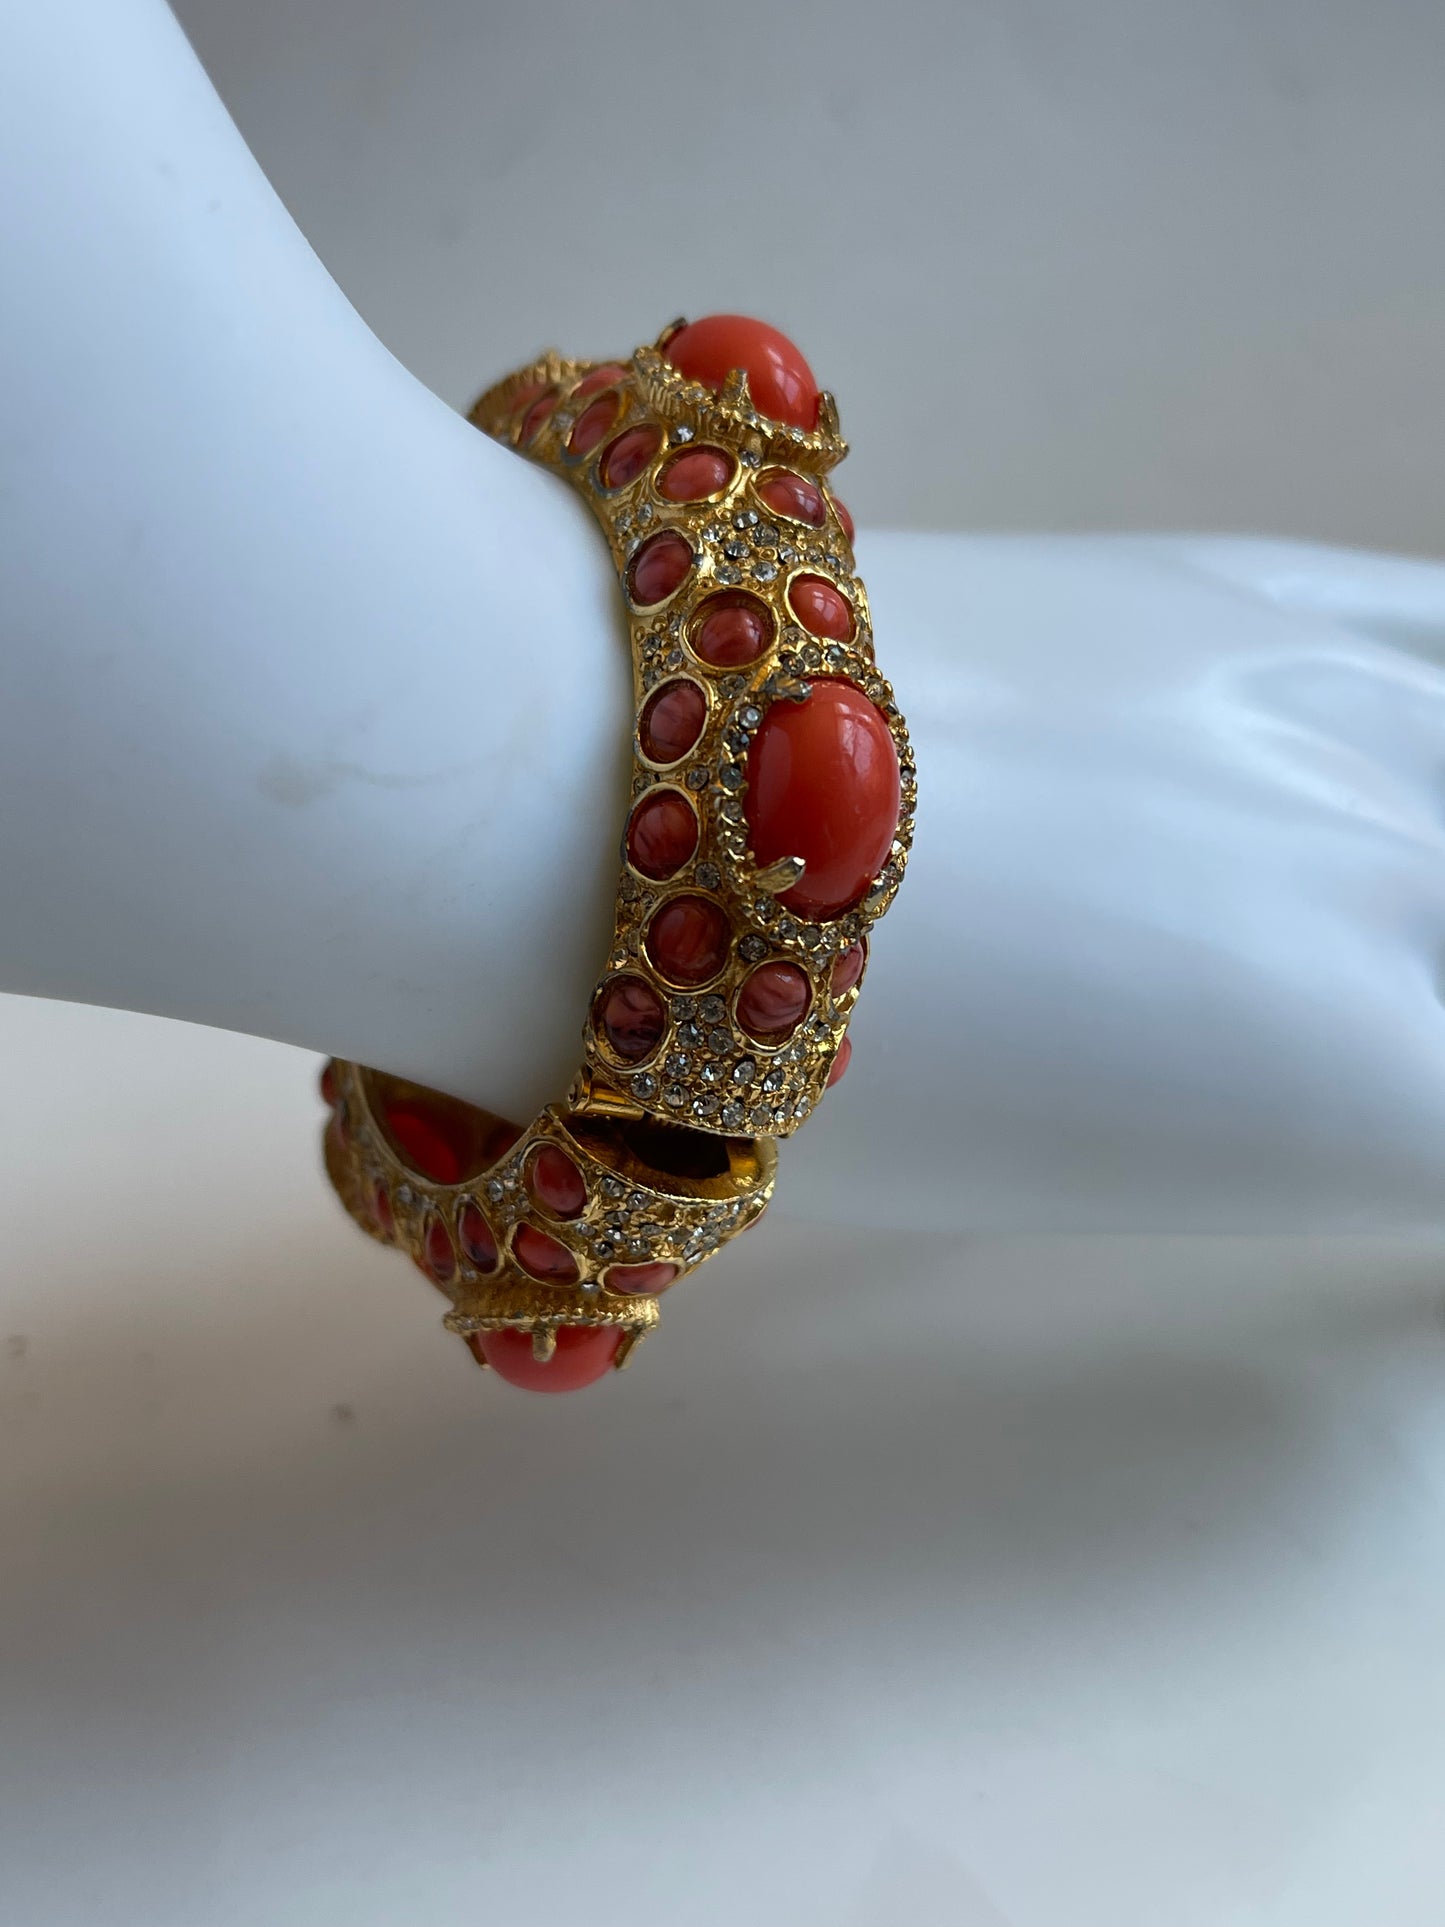 A vintage KJL coral like bracelet with rhinestones